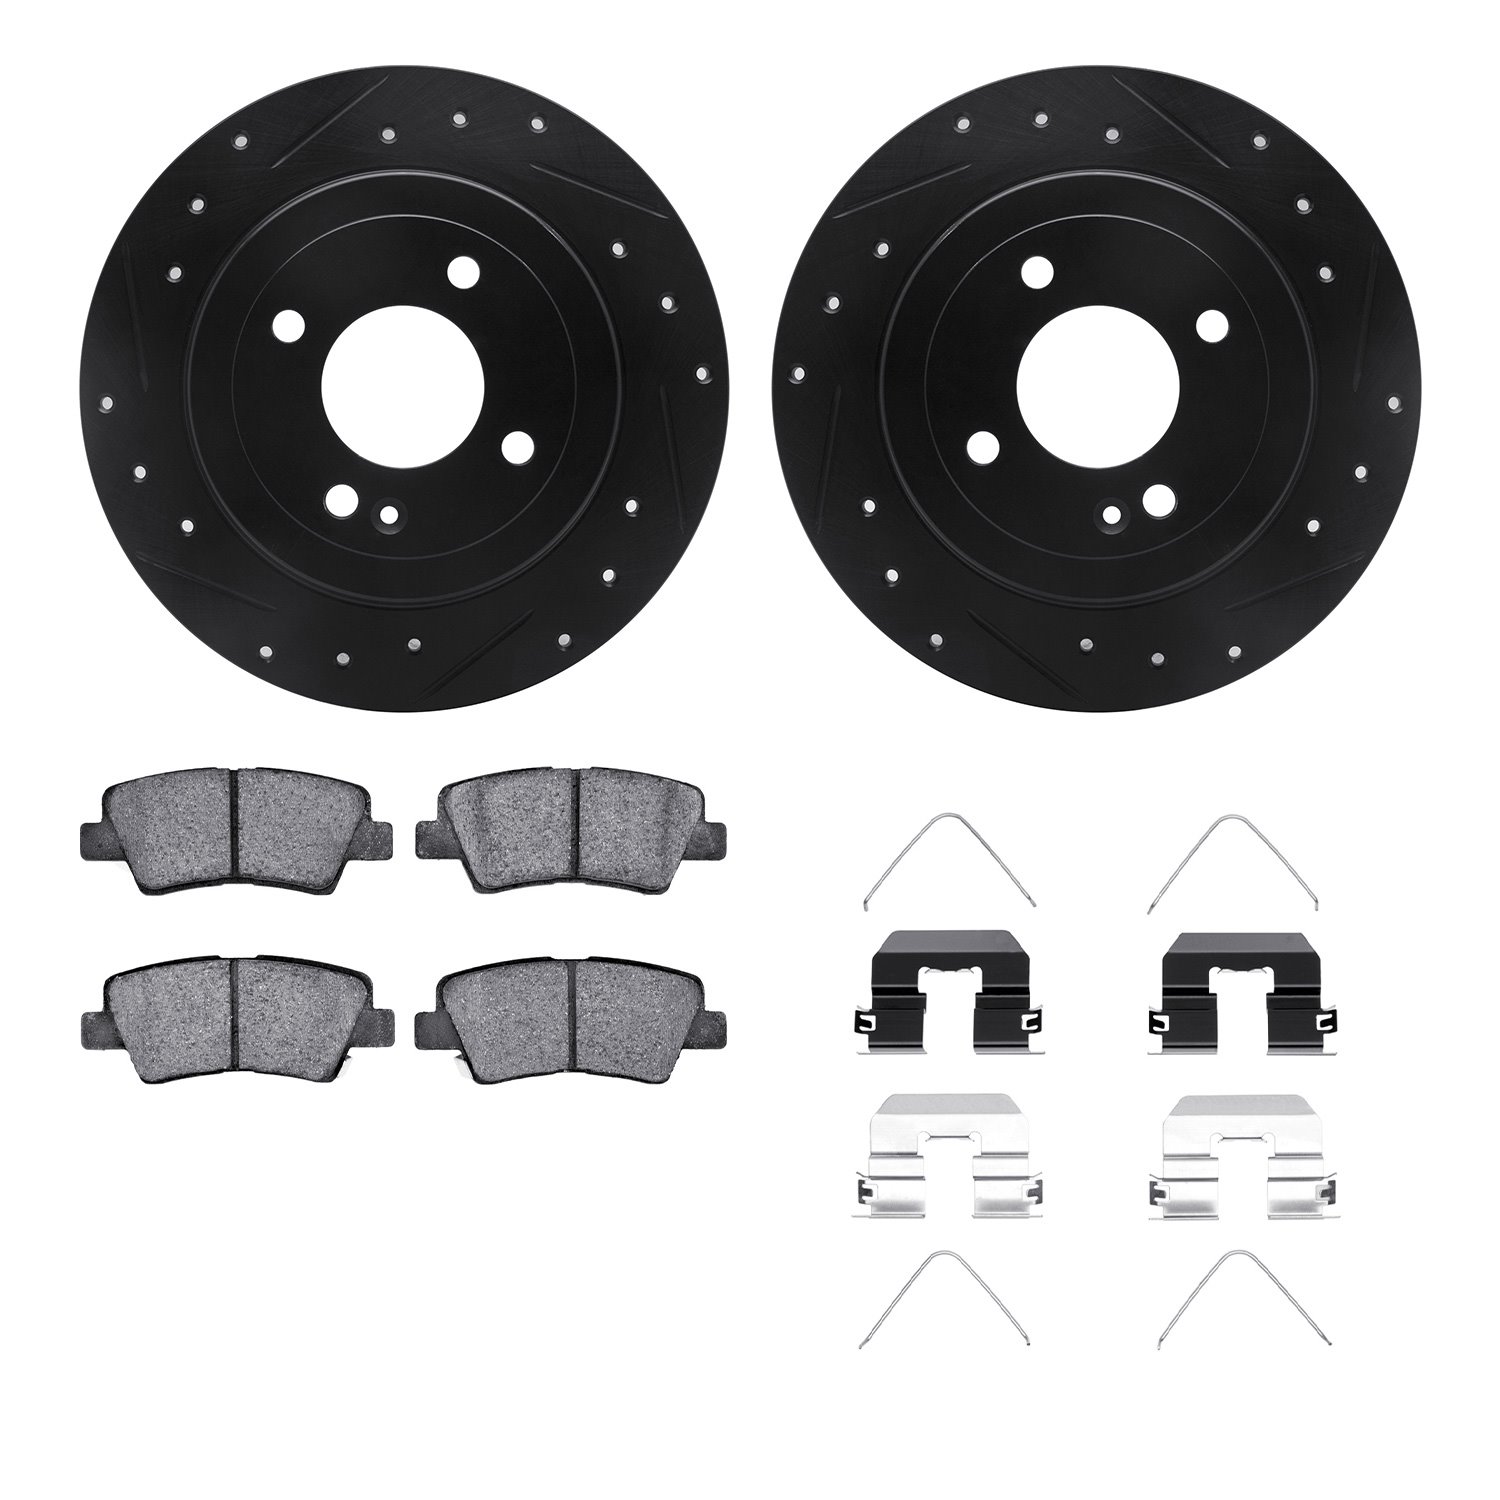 8312-03079 Drilled/Slotted Brake Rotors with 3000-Series Ceramic Brake Pads Kit & Hardware [Black], Fits Select Kia/Hyundai/Gene